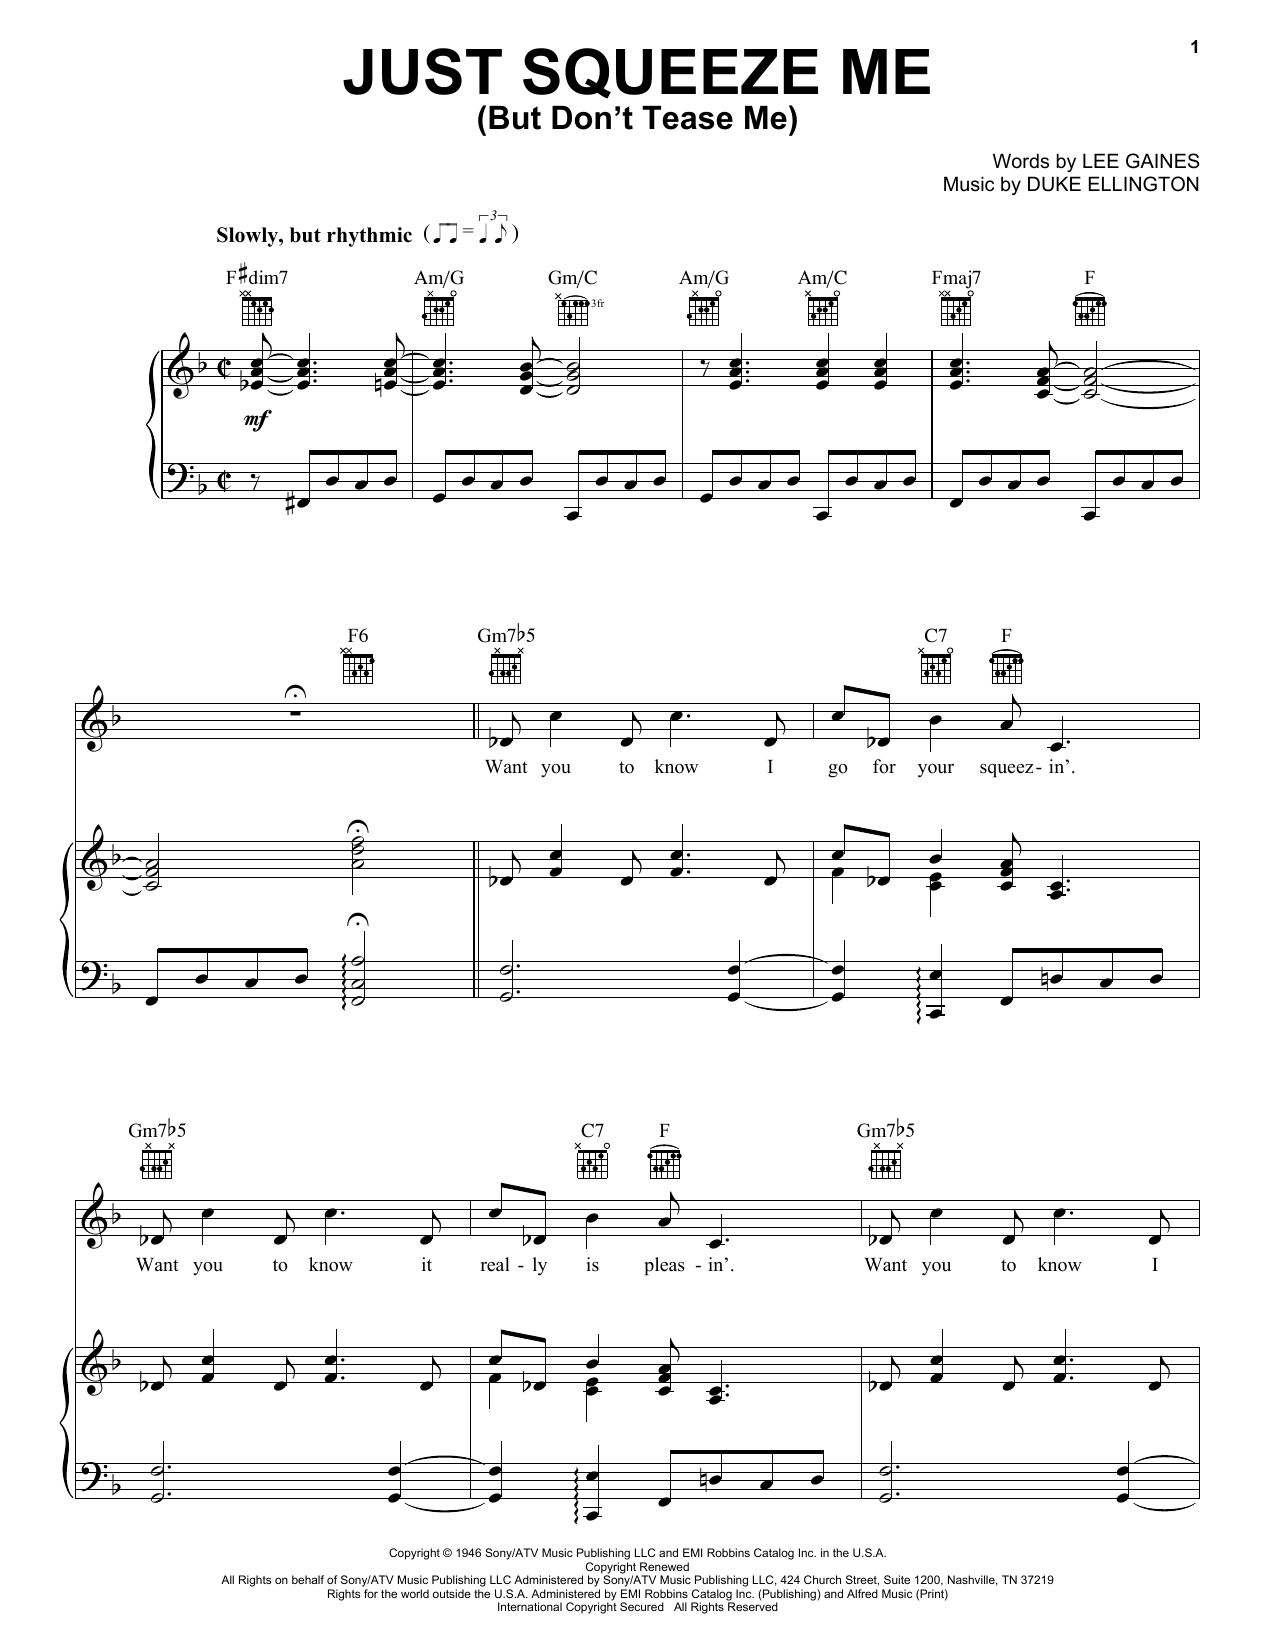 Duke Ellington Just Squeeze Me (But Don't Tease Me) Sheet Music Notes & Chords for Ukulele - Download or Print PDF